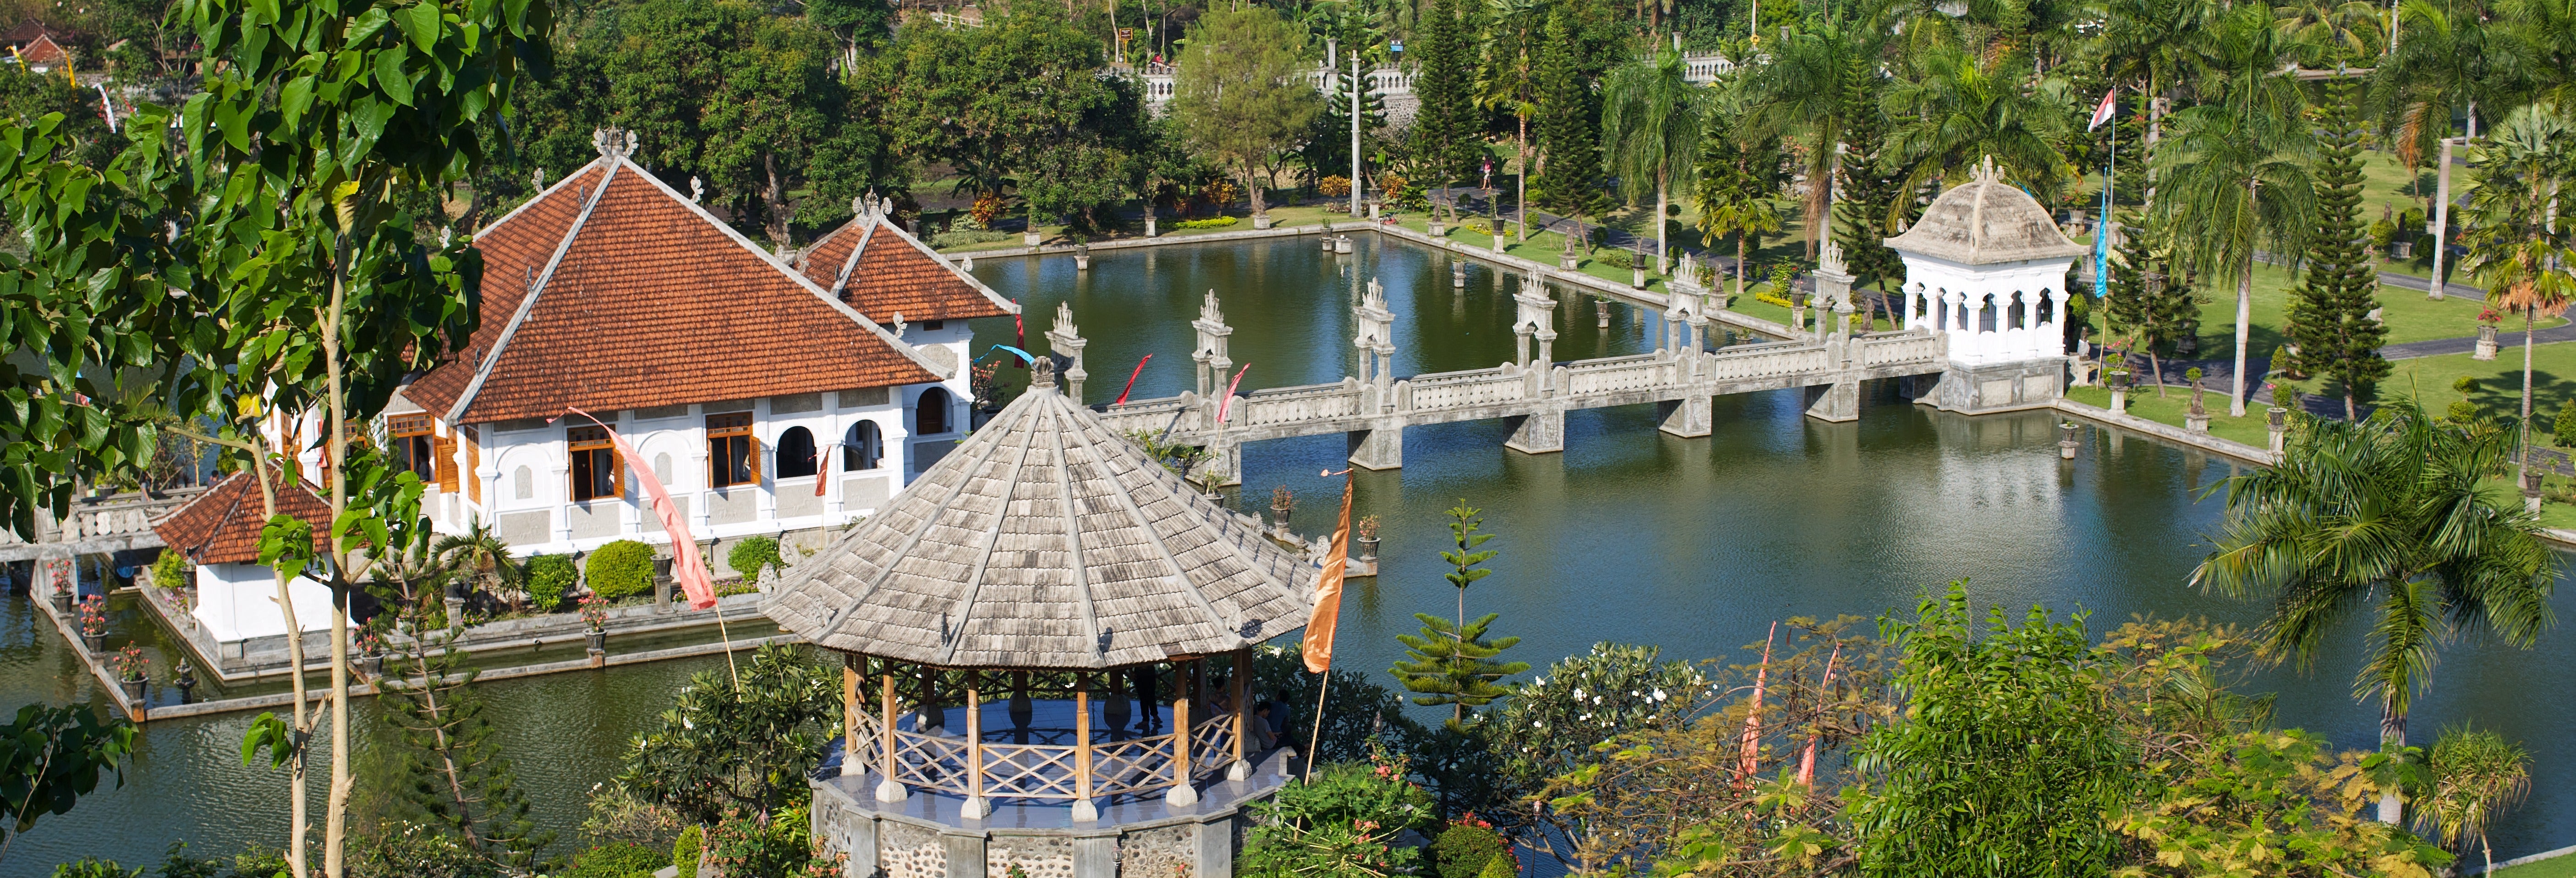 Taman Ujung and Tirta Gangga Foating Palaces